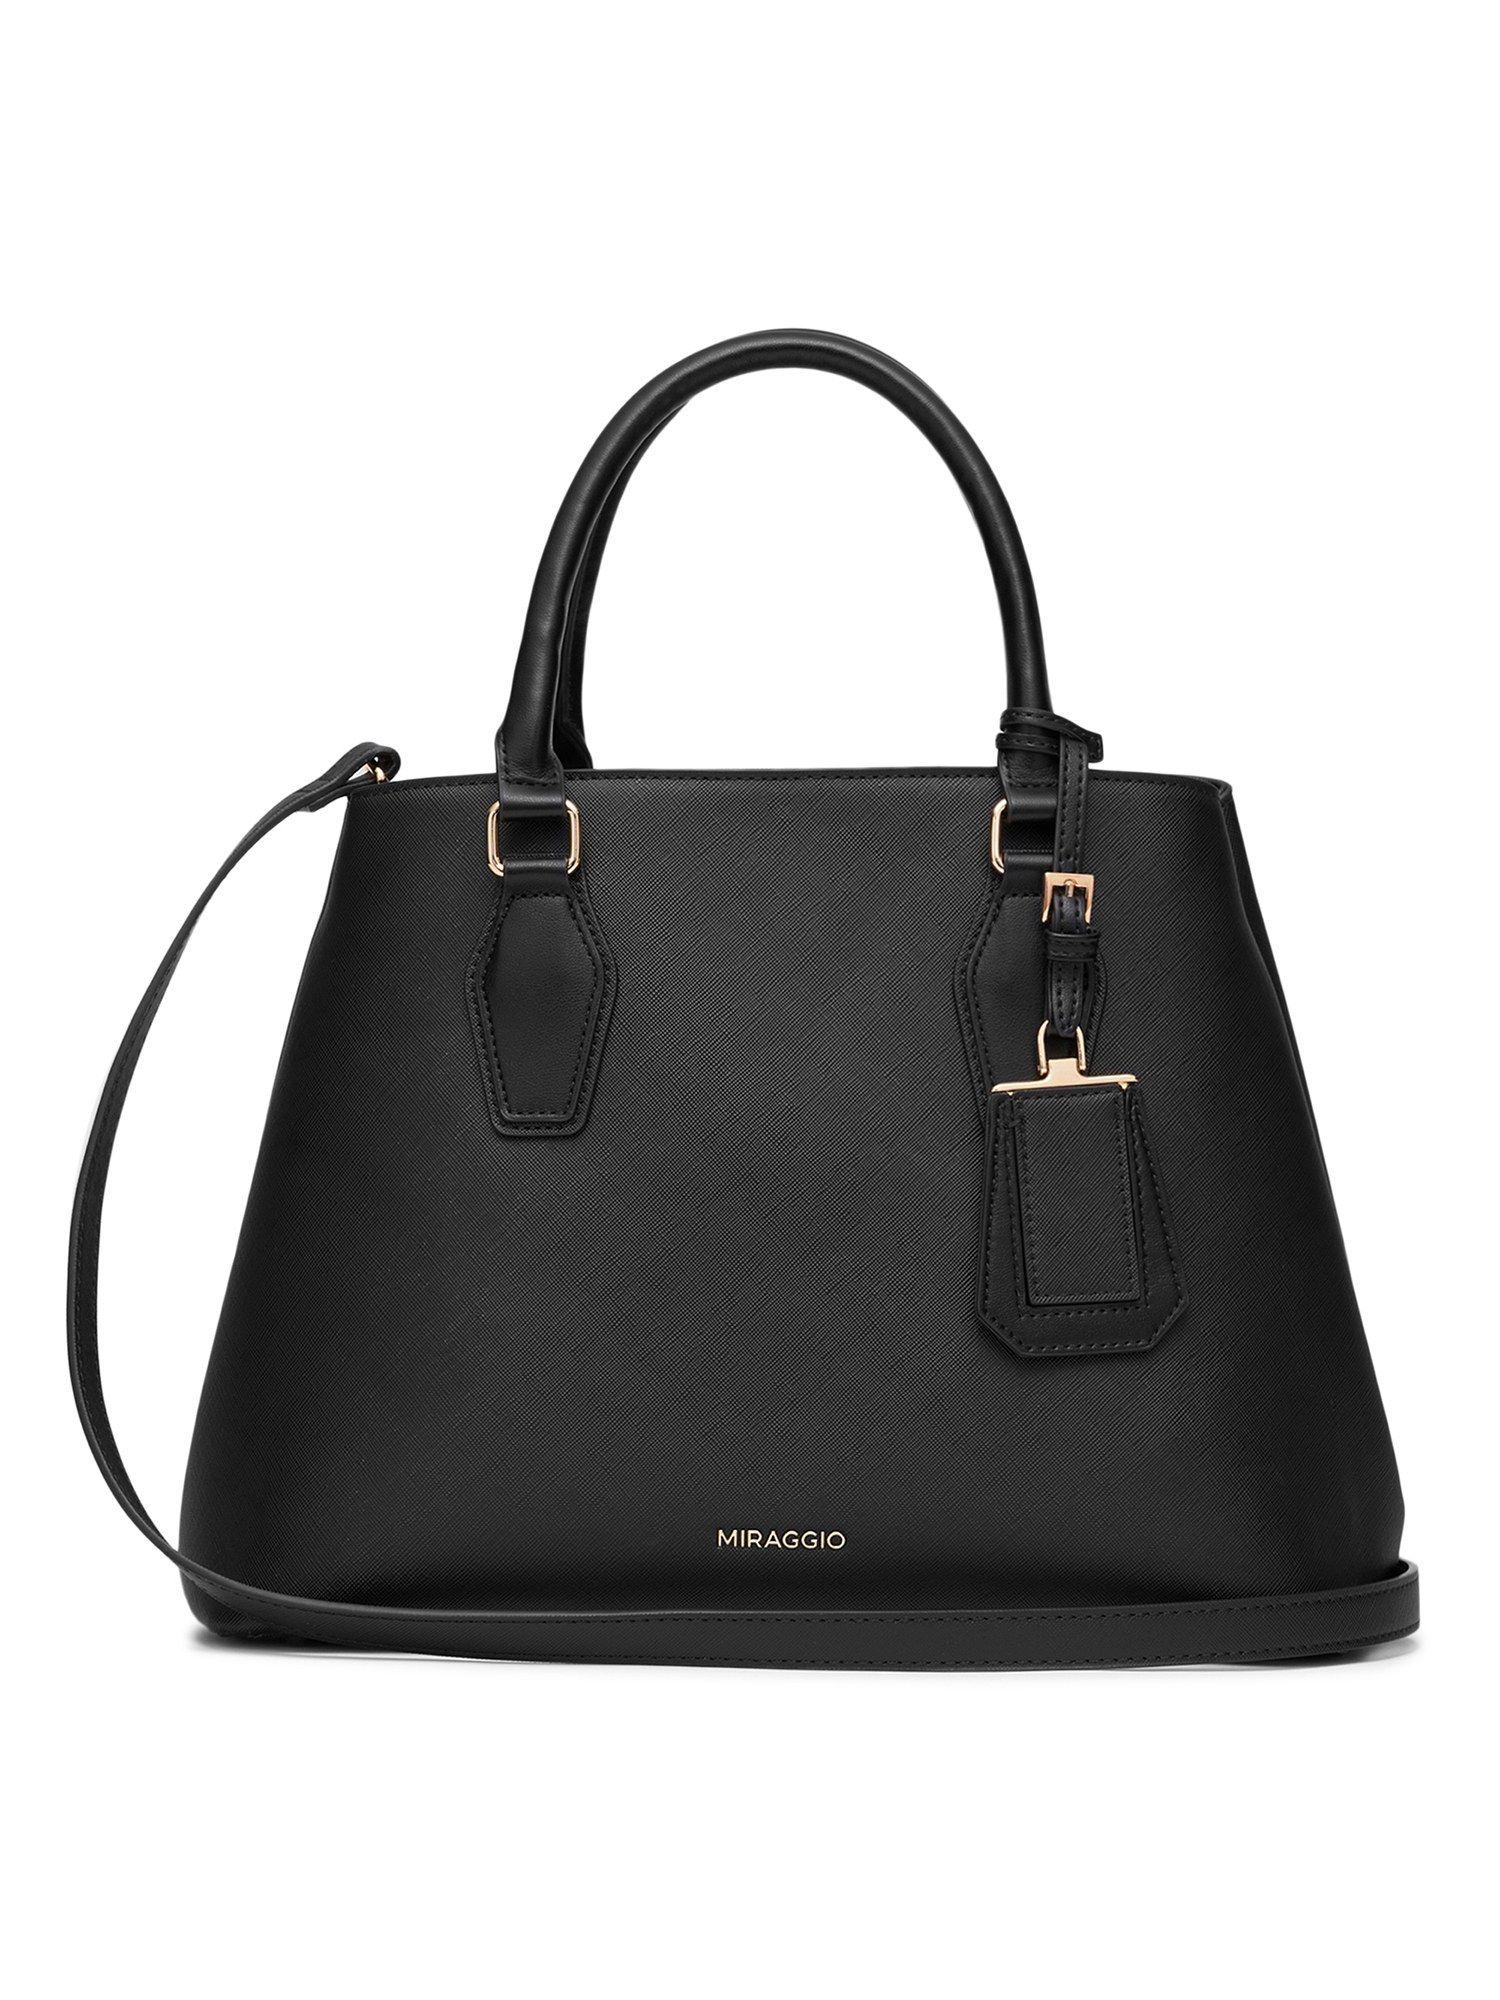 olivia handbag with adjustable and detachable crossbody strap - black (m)